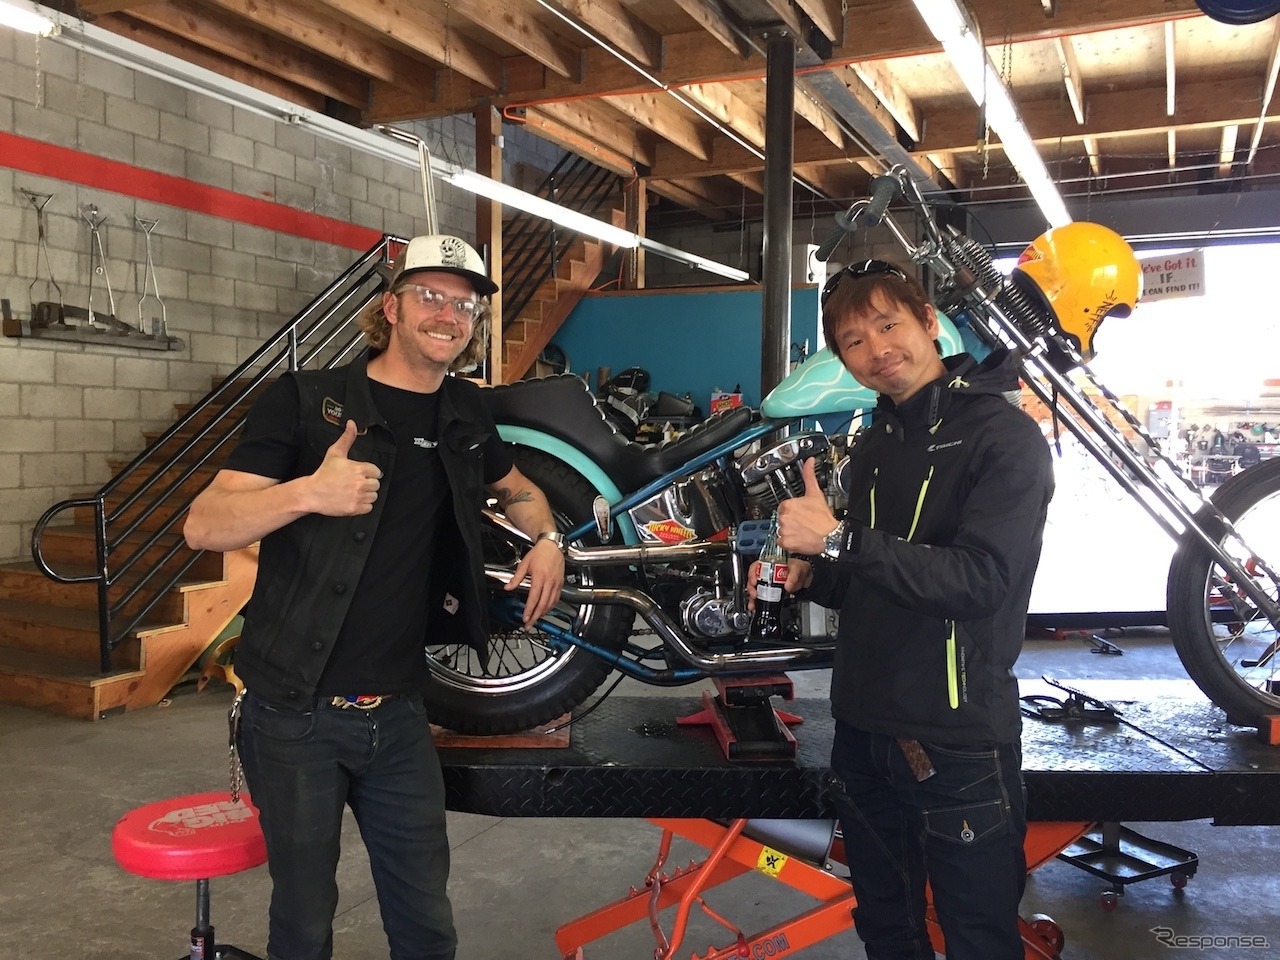 「Lucky Wheels Garage」のカスタムビルダー、エディンストンさんと、北米試乗会に参加したバイクジャーナリストの青木タカオ。